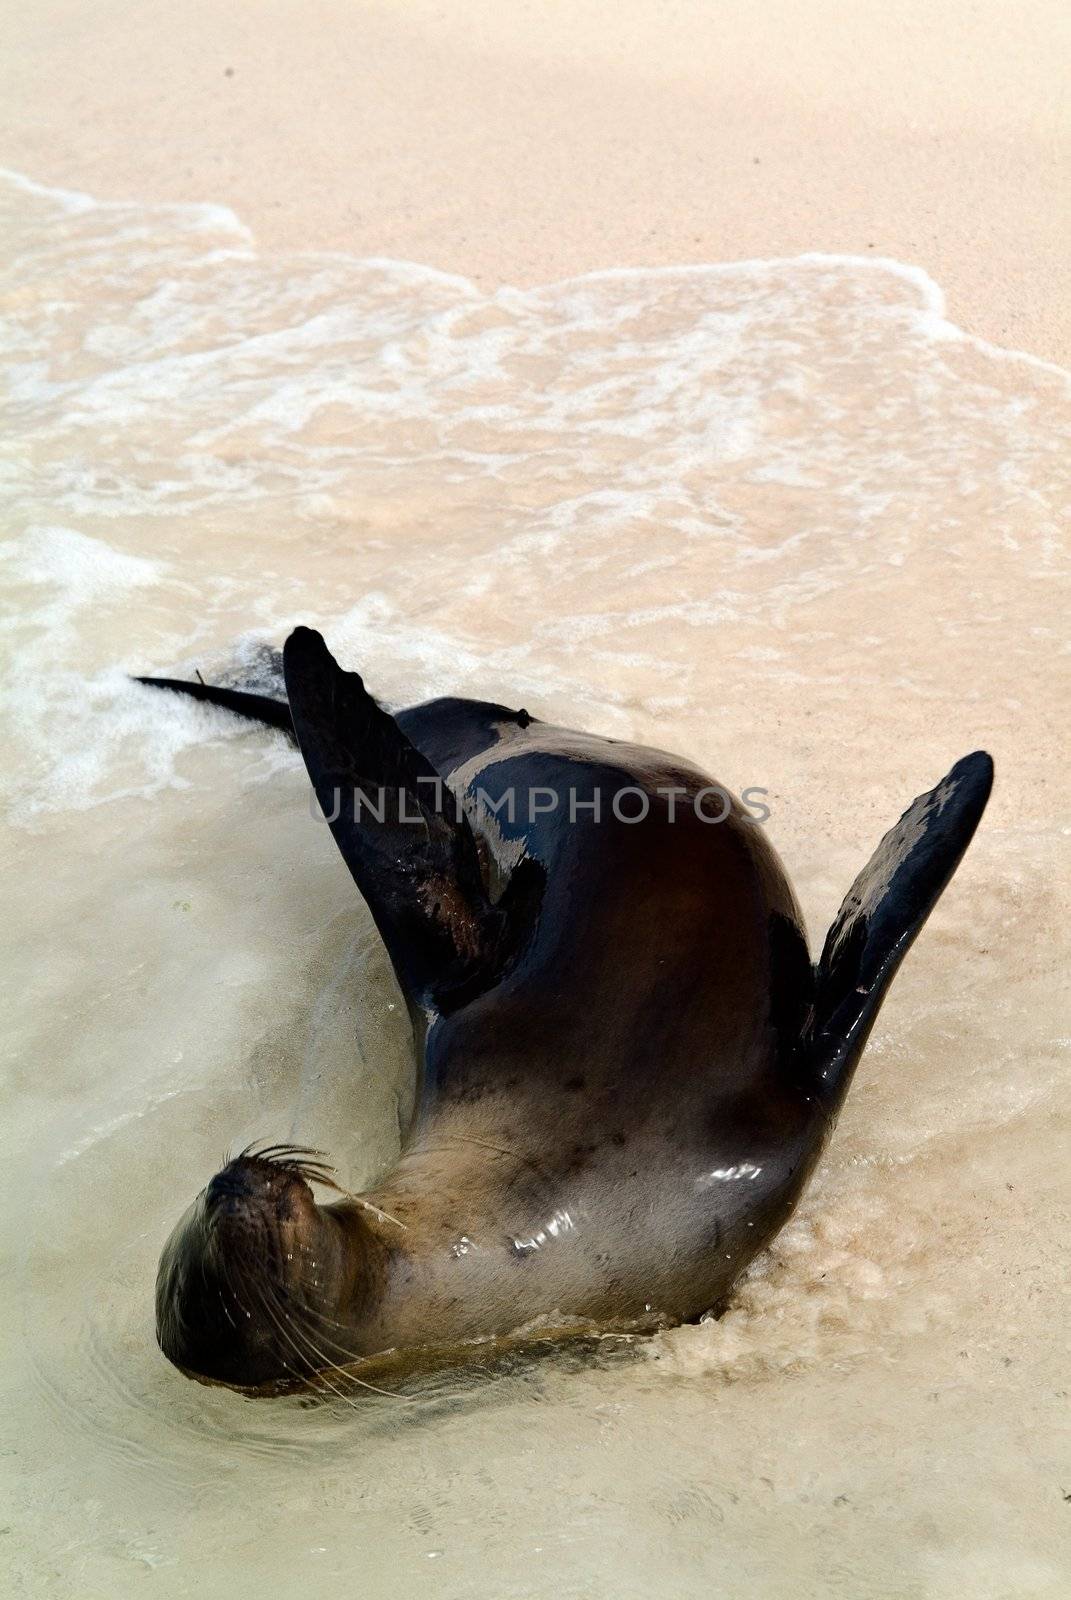 Luxury. The seal luxuriates on sandy coast of a beach in a surf strip.